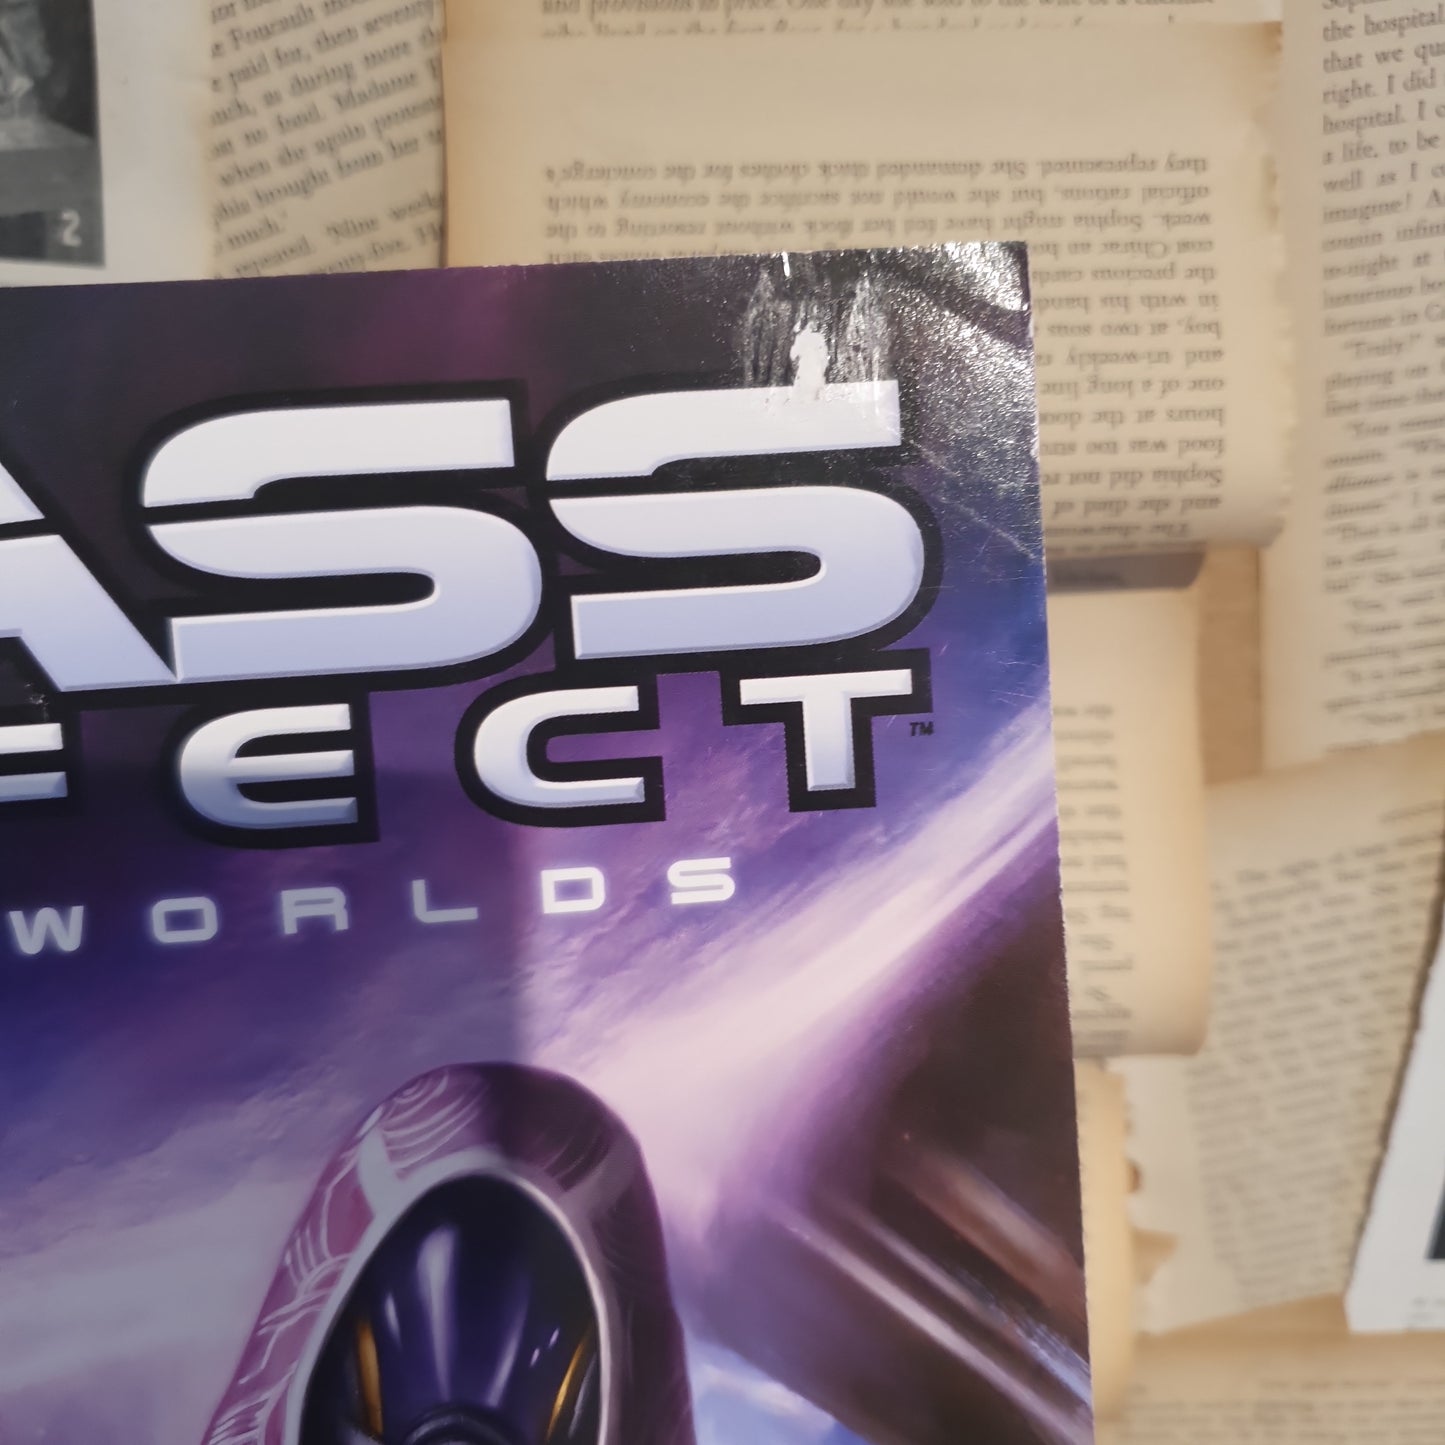 Mass Effect Homewolds by Mac Walters (2012)